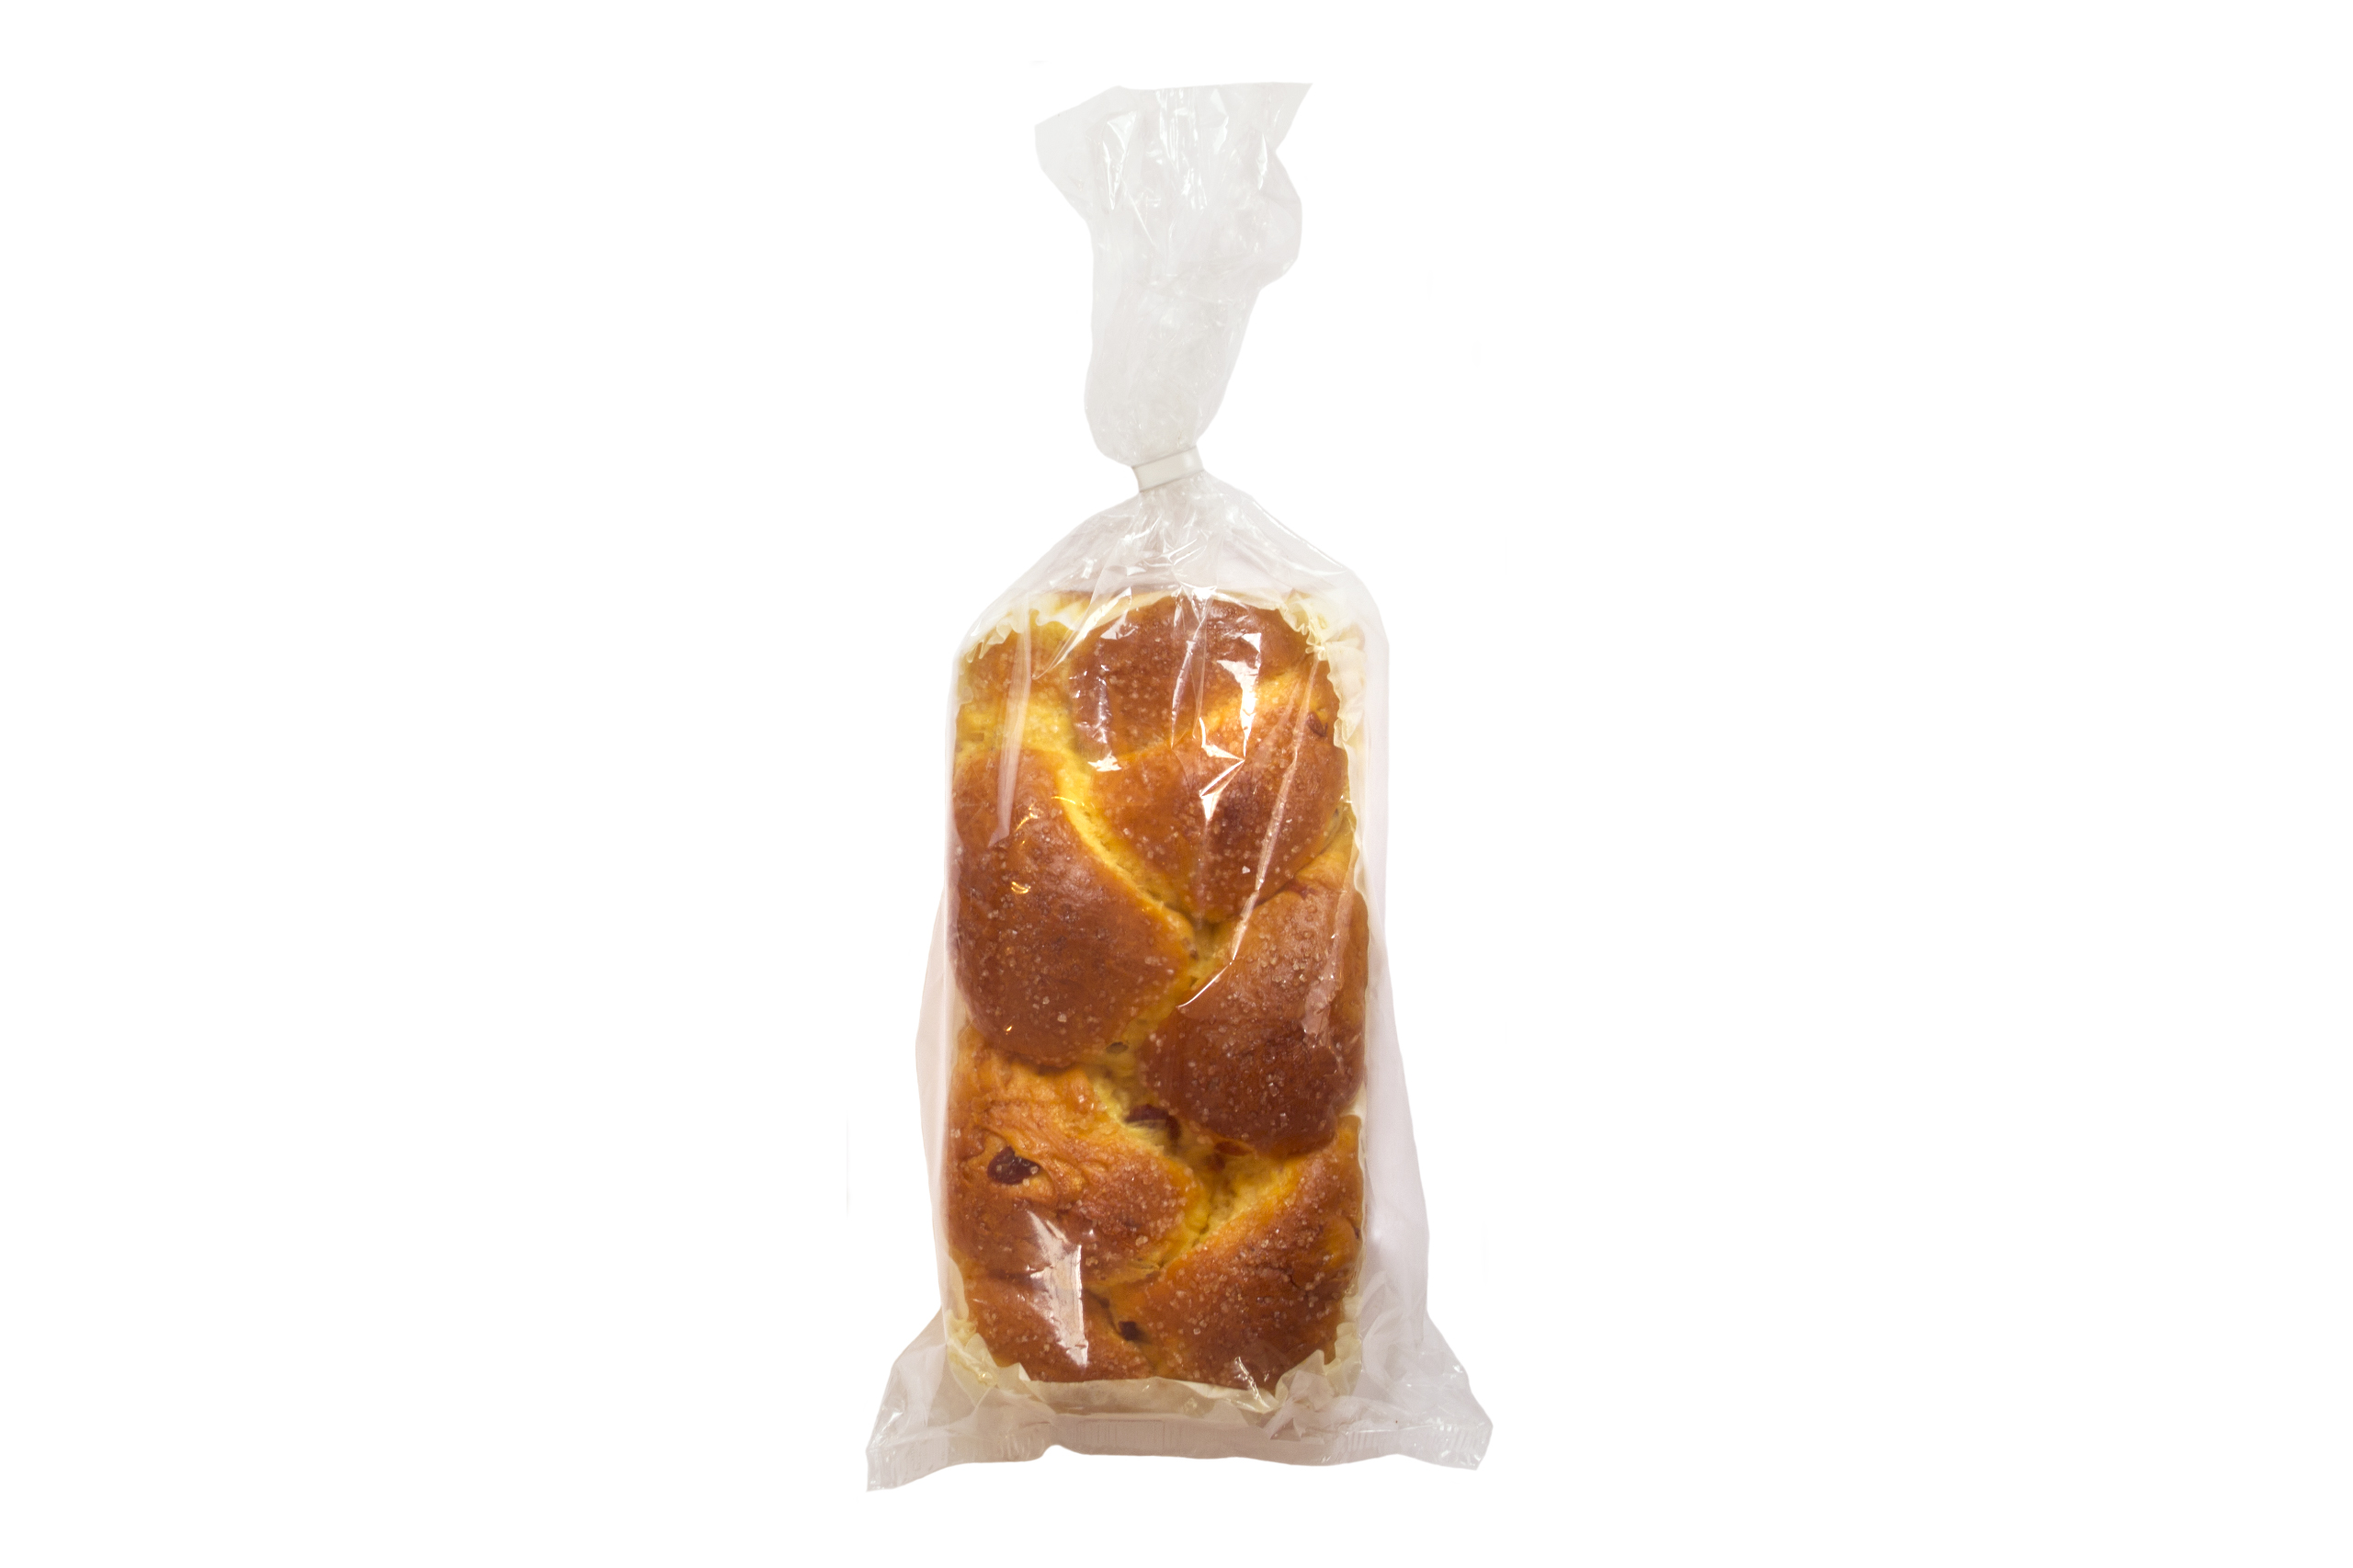 A EuroClassic Cranberry Orange Brioche Twist Loaf, packaged in a clear plastic bag.